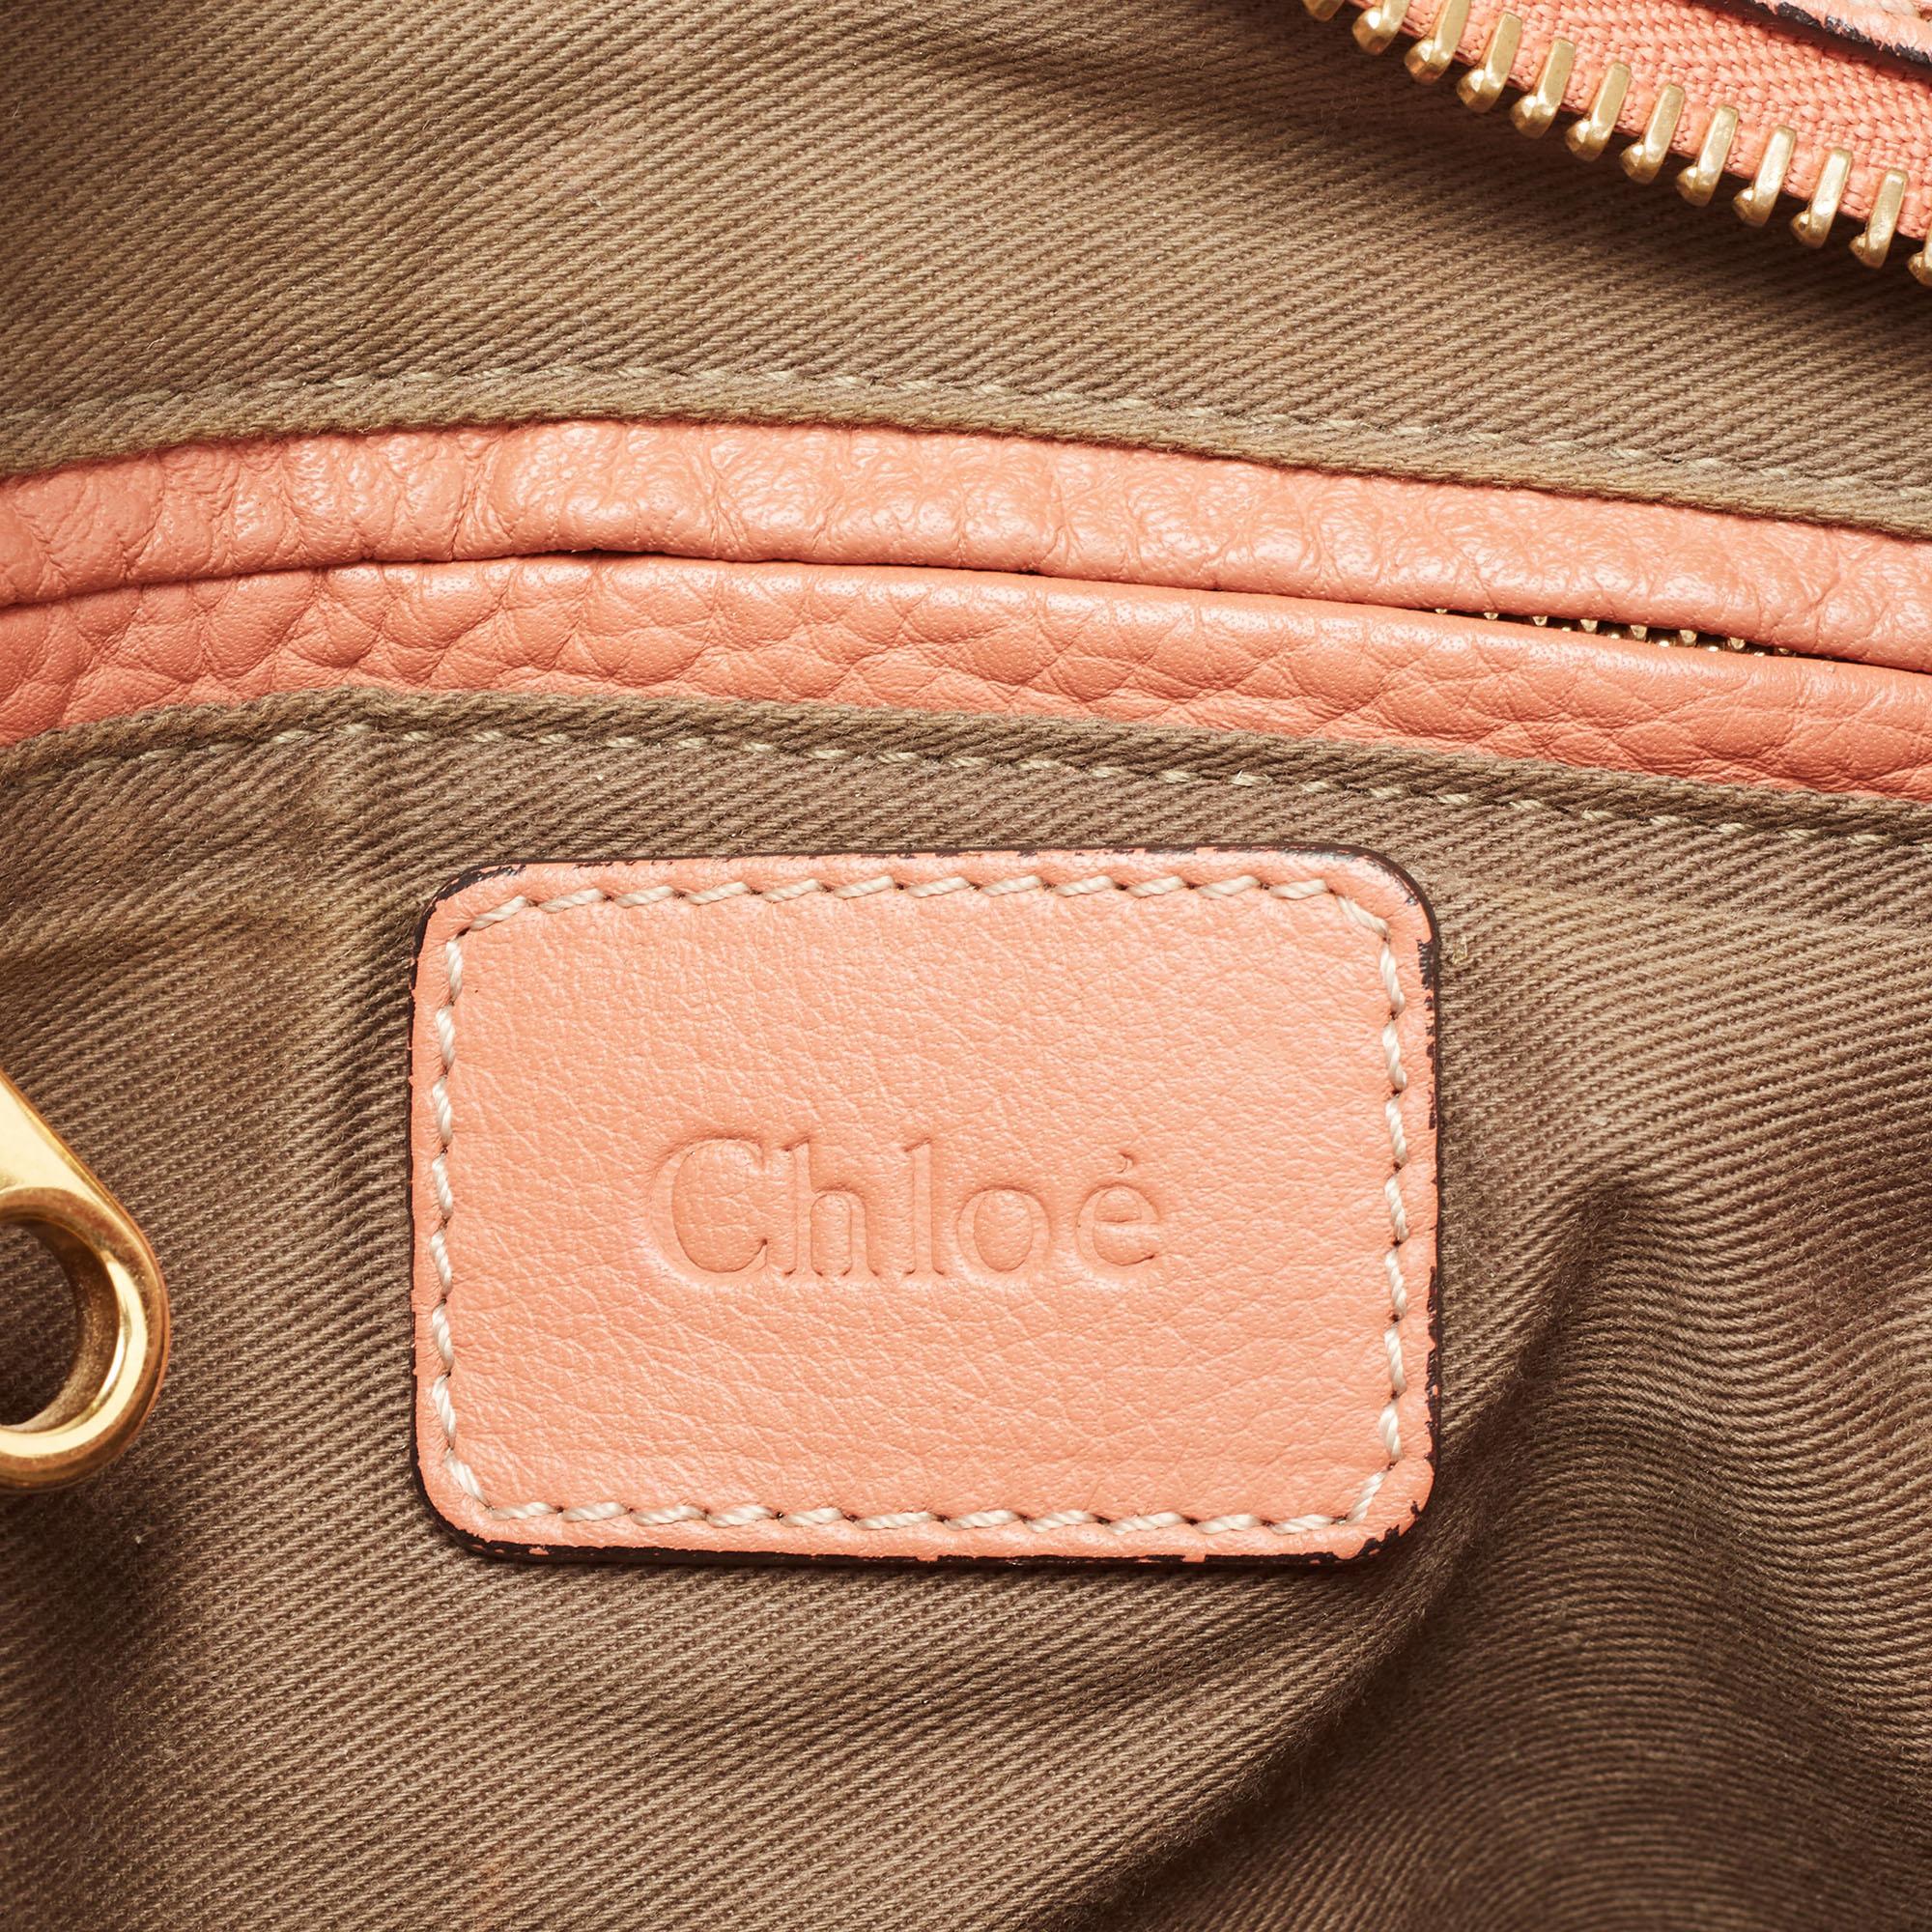 Orange Chloe Peach Leather Medium Marcie Shoulder Bag